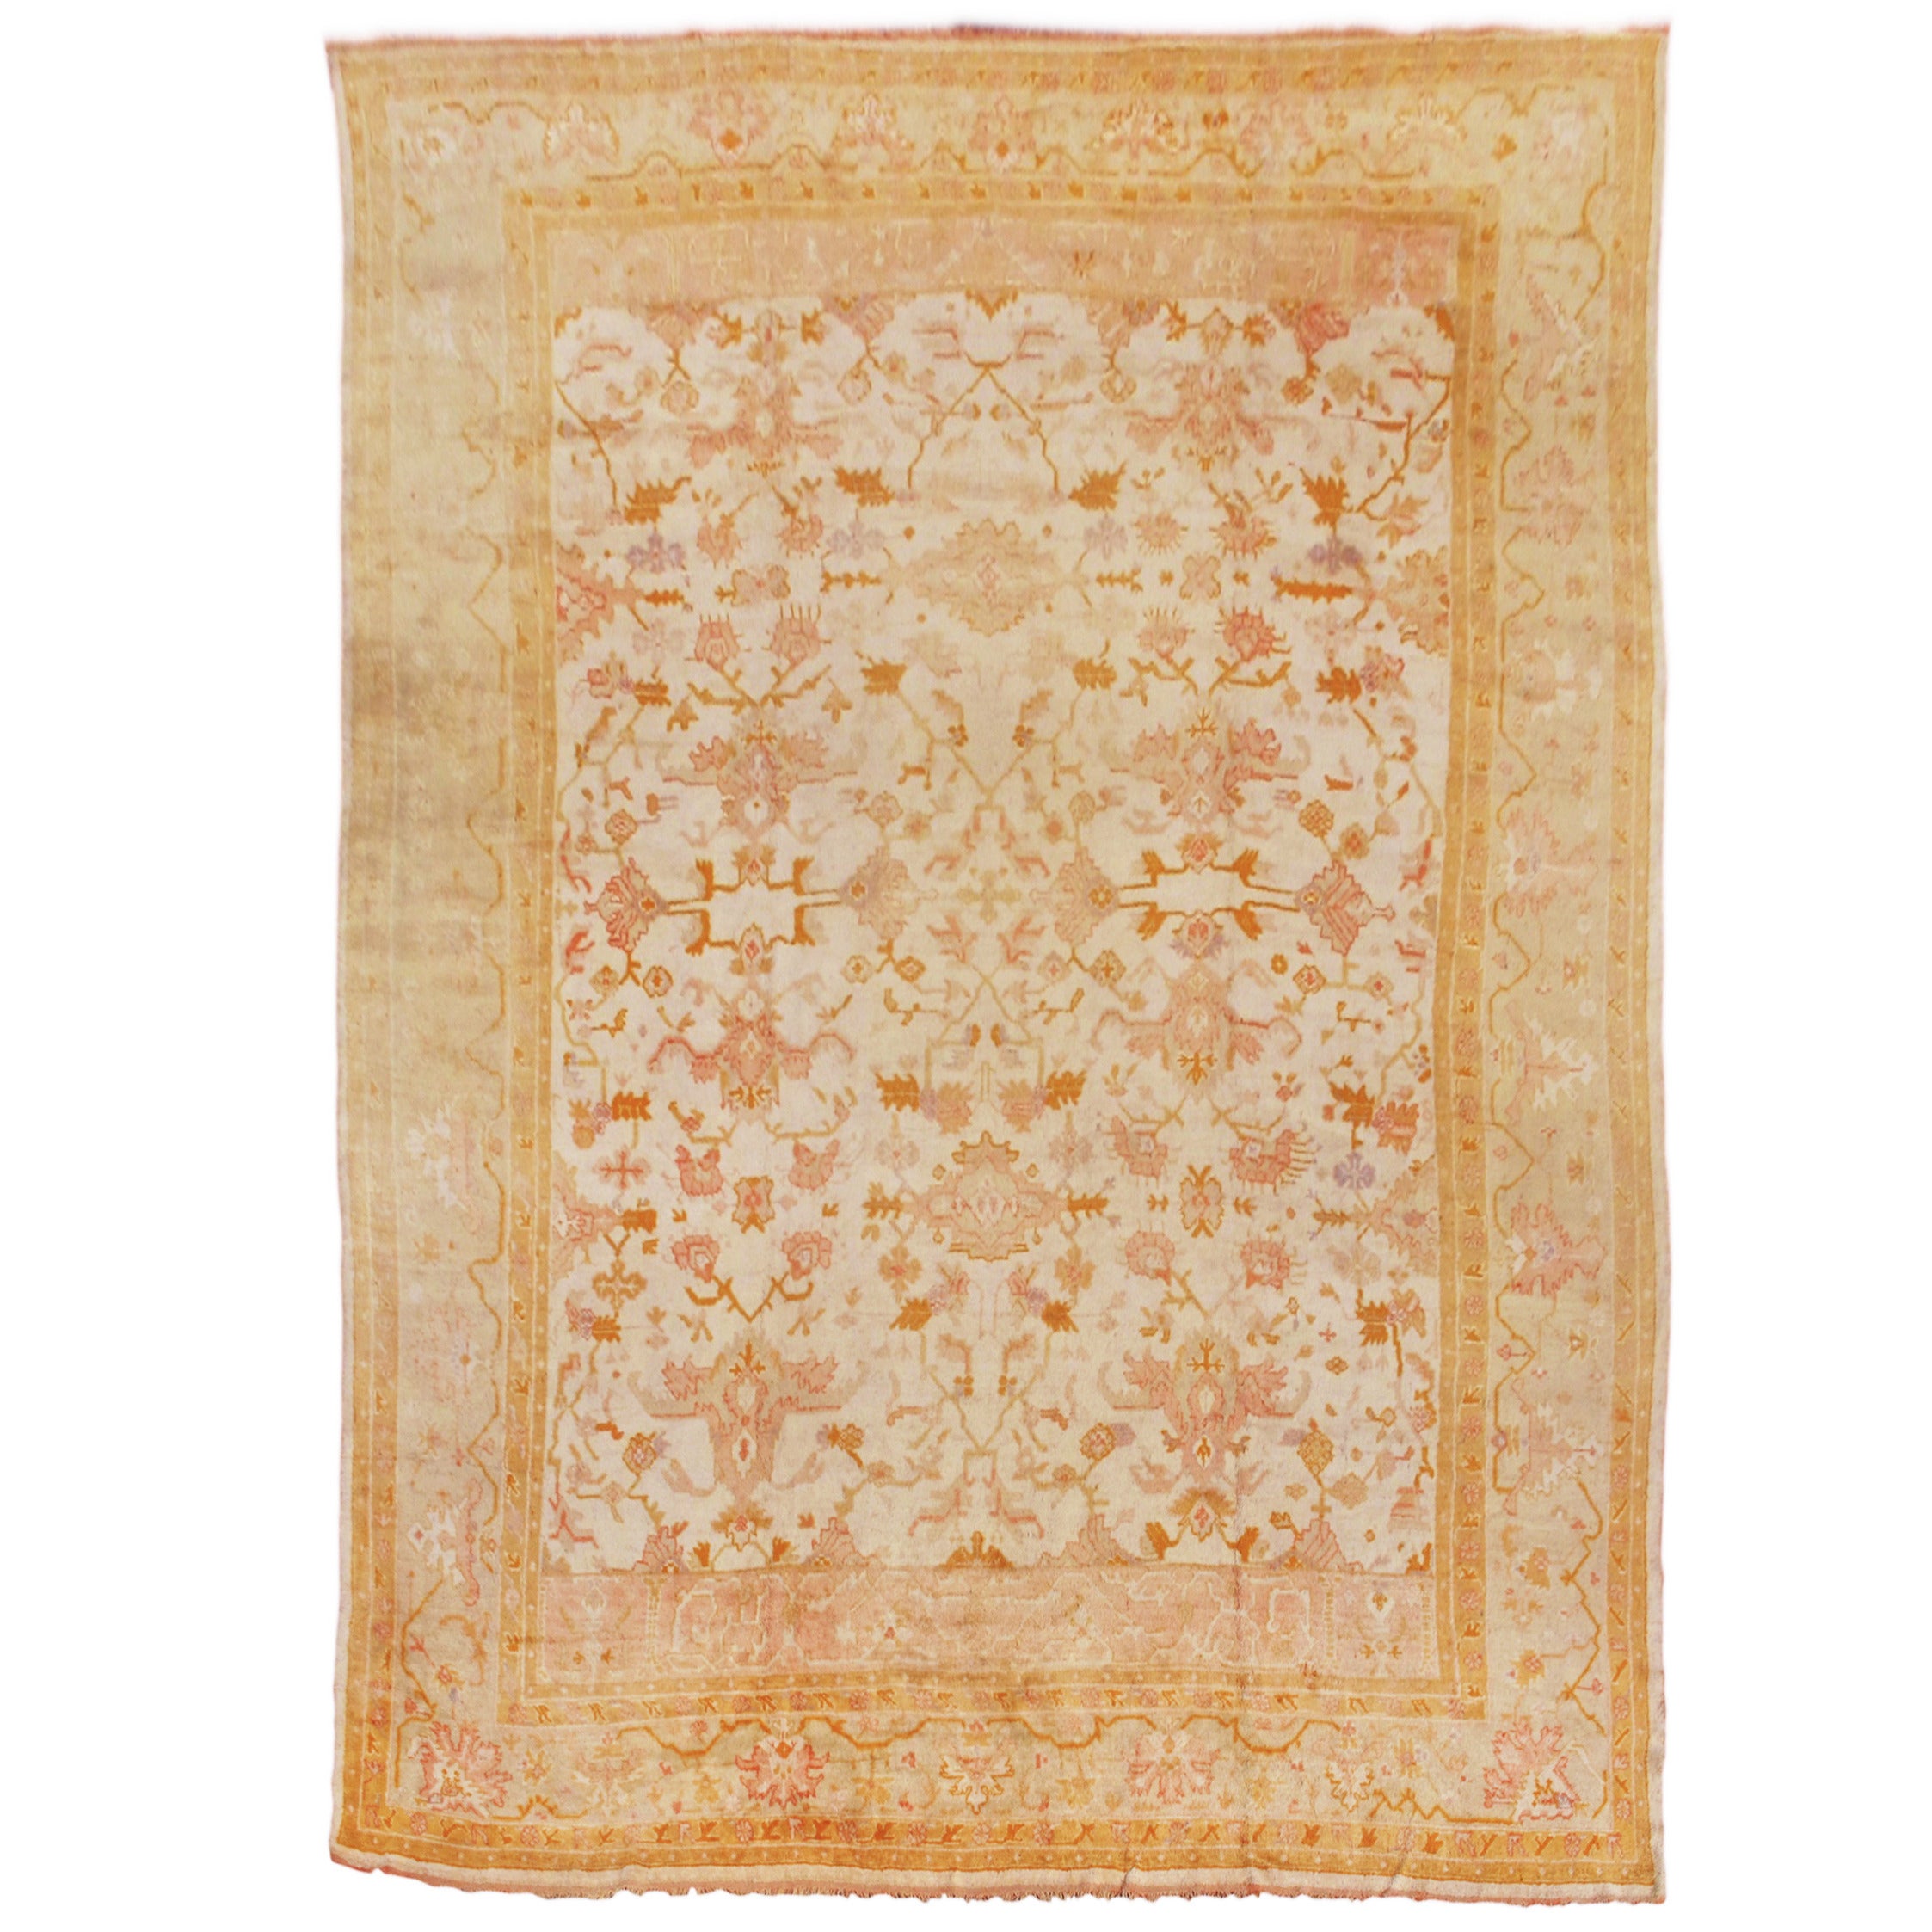 Early 20th Century Gold and Khaki Oushak Carpet